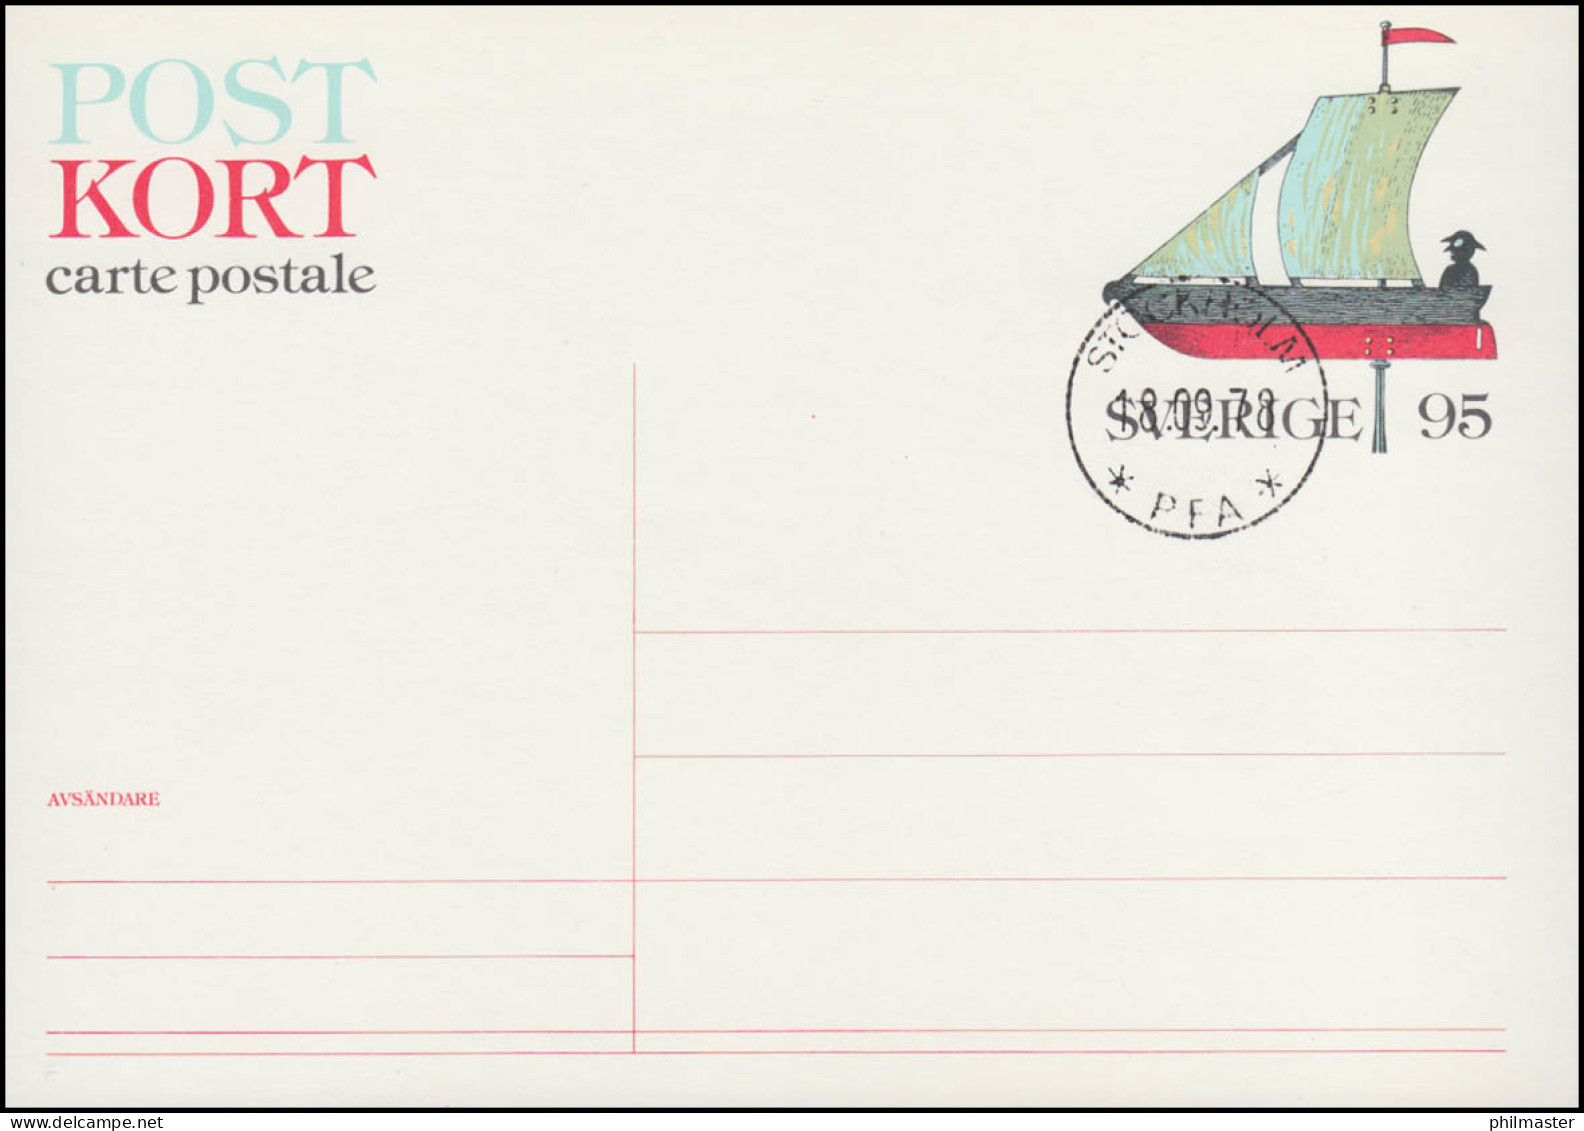 Schweden Postkarte P 100 Segelboot 95 Öre 1977, Gestempelt - Ganzsachen